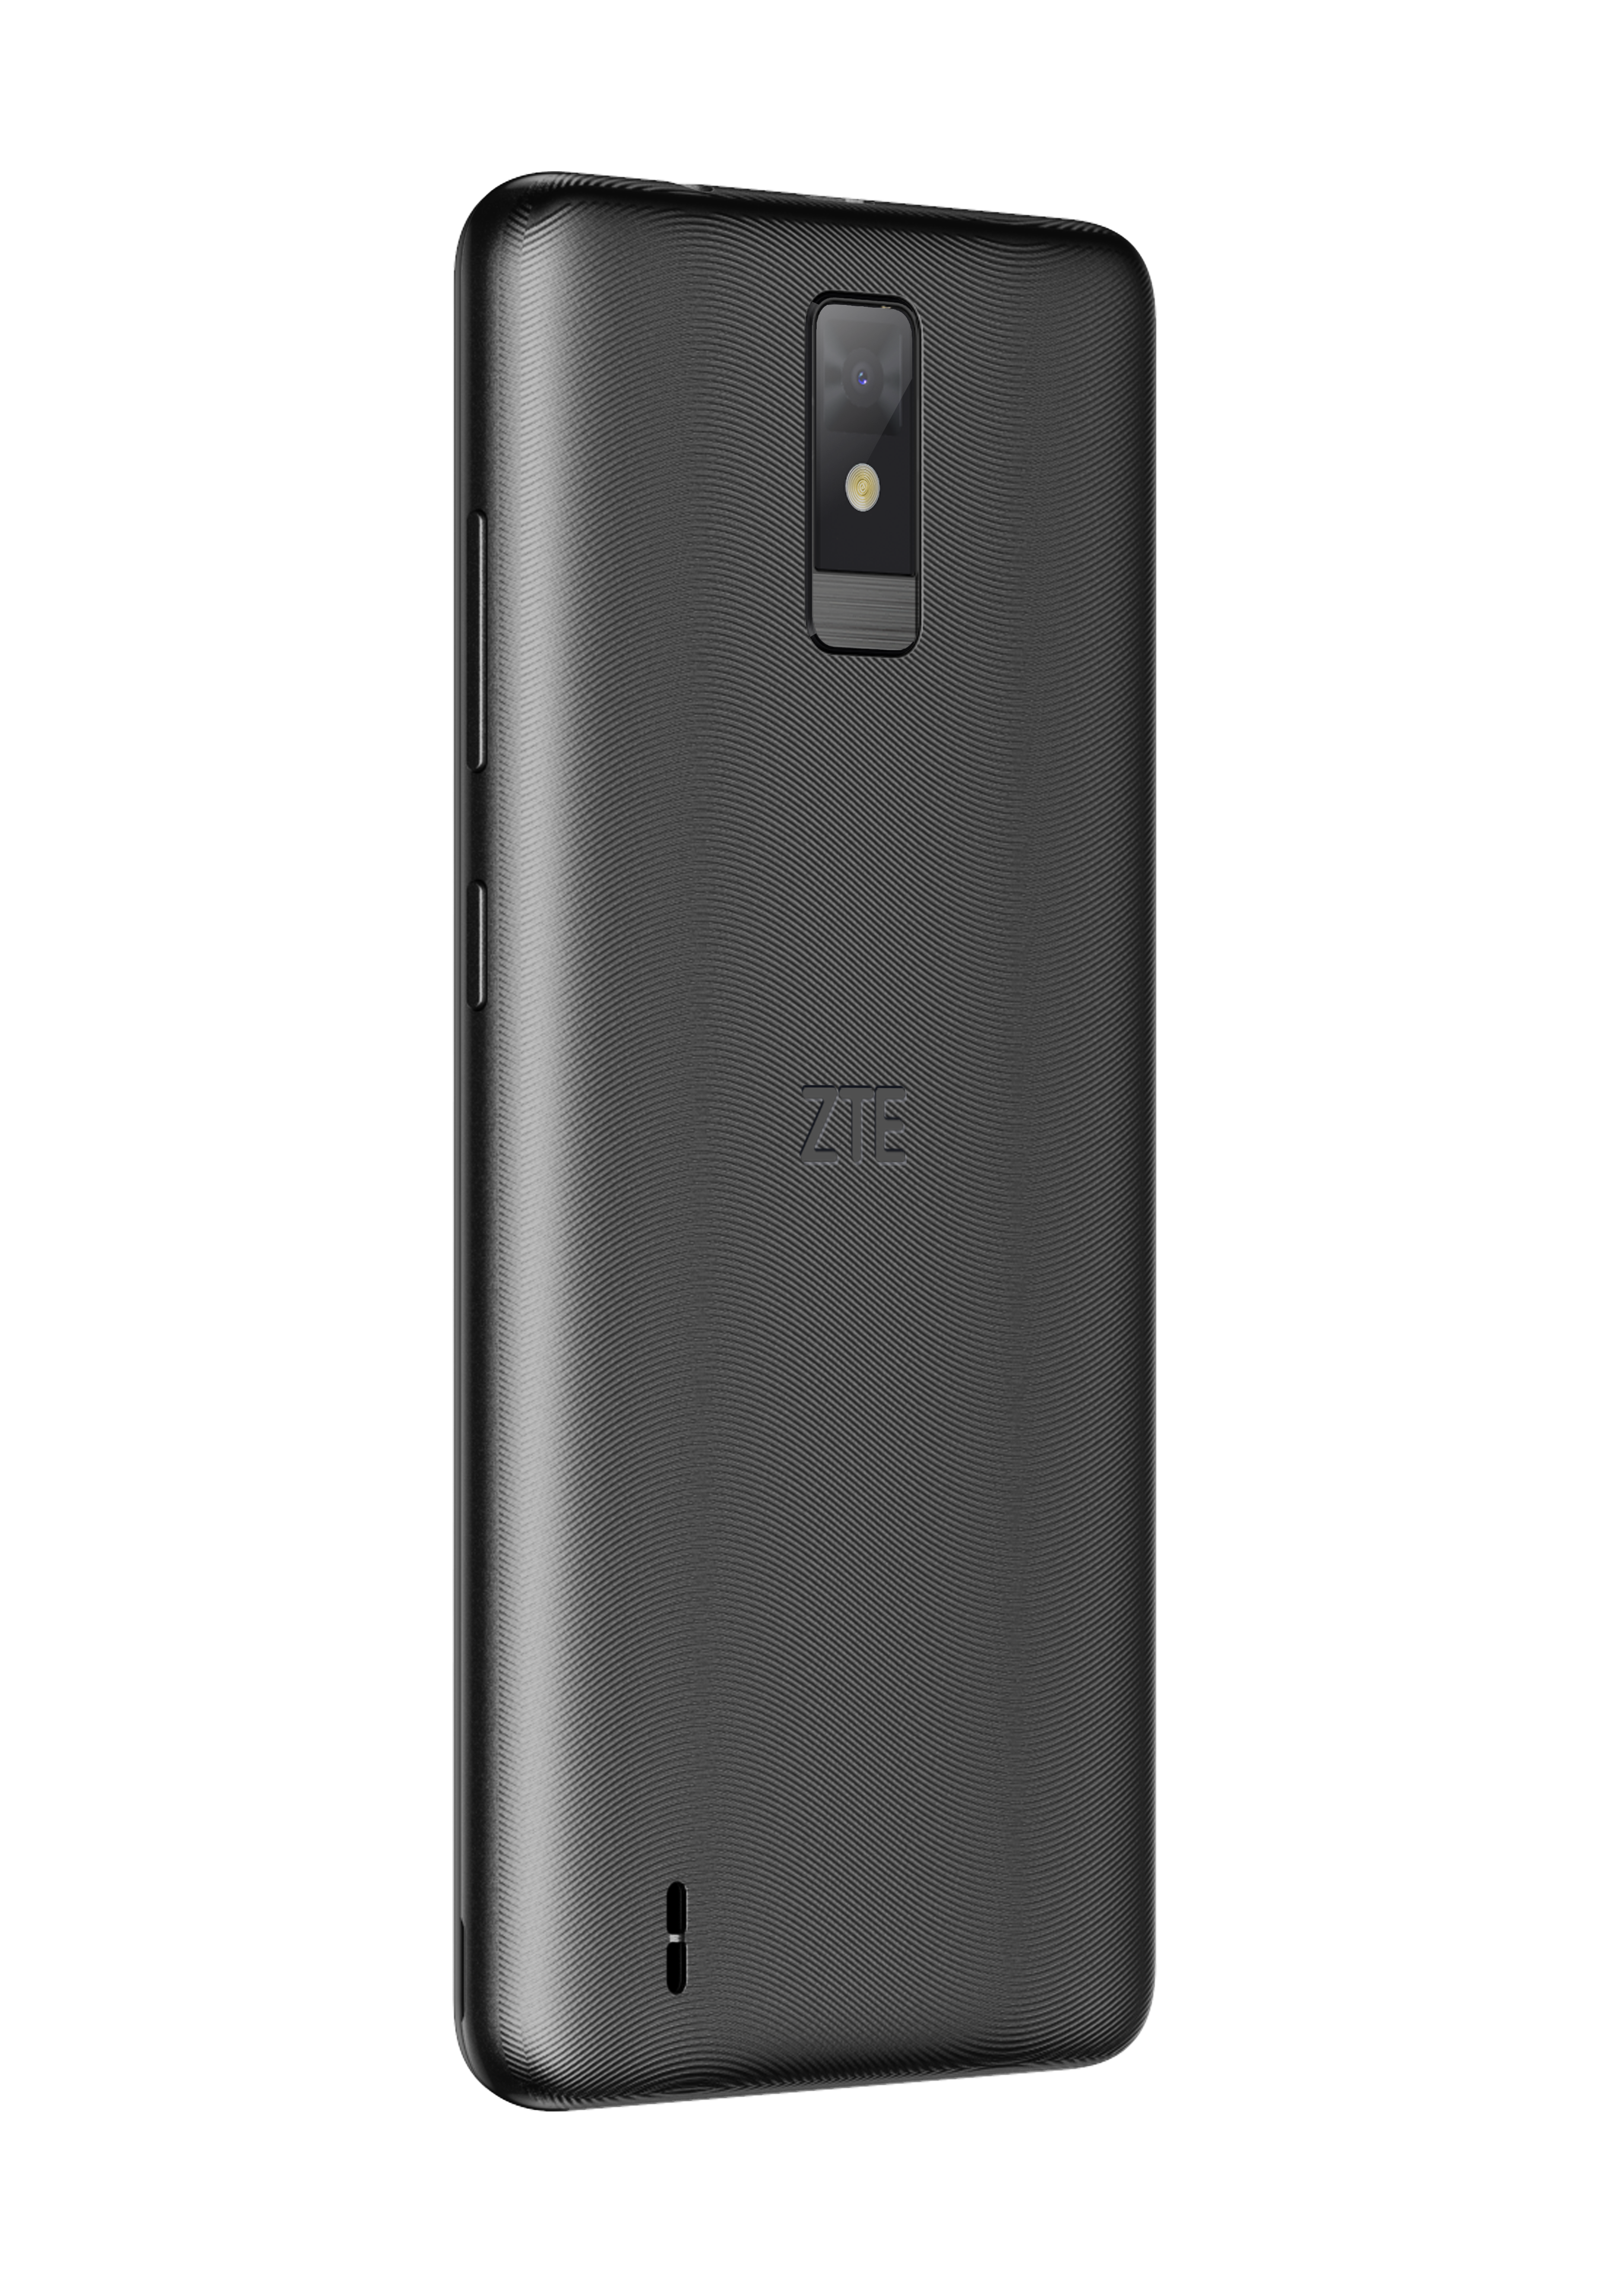 ZTE Blade A32 SIM GB Dual Schwarz 32